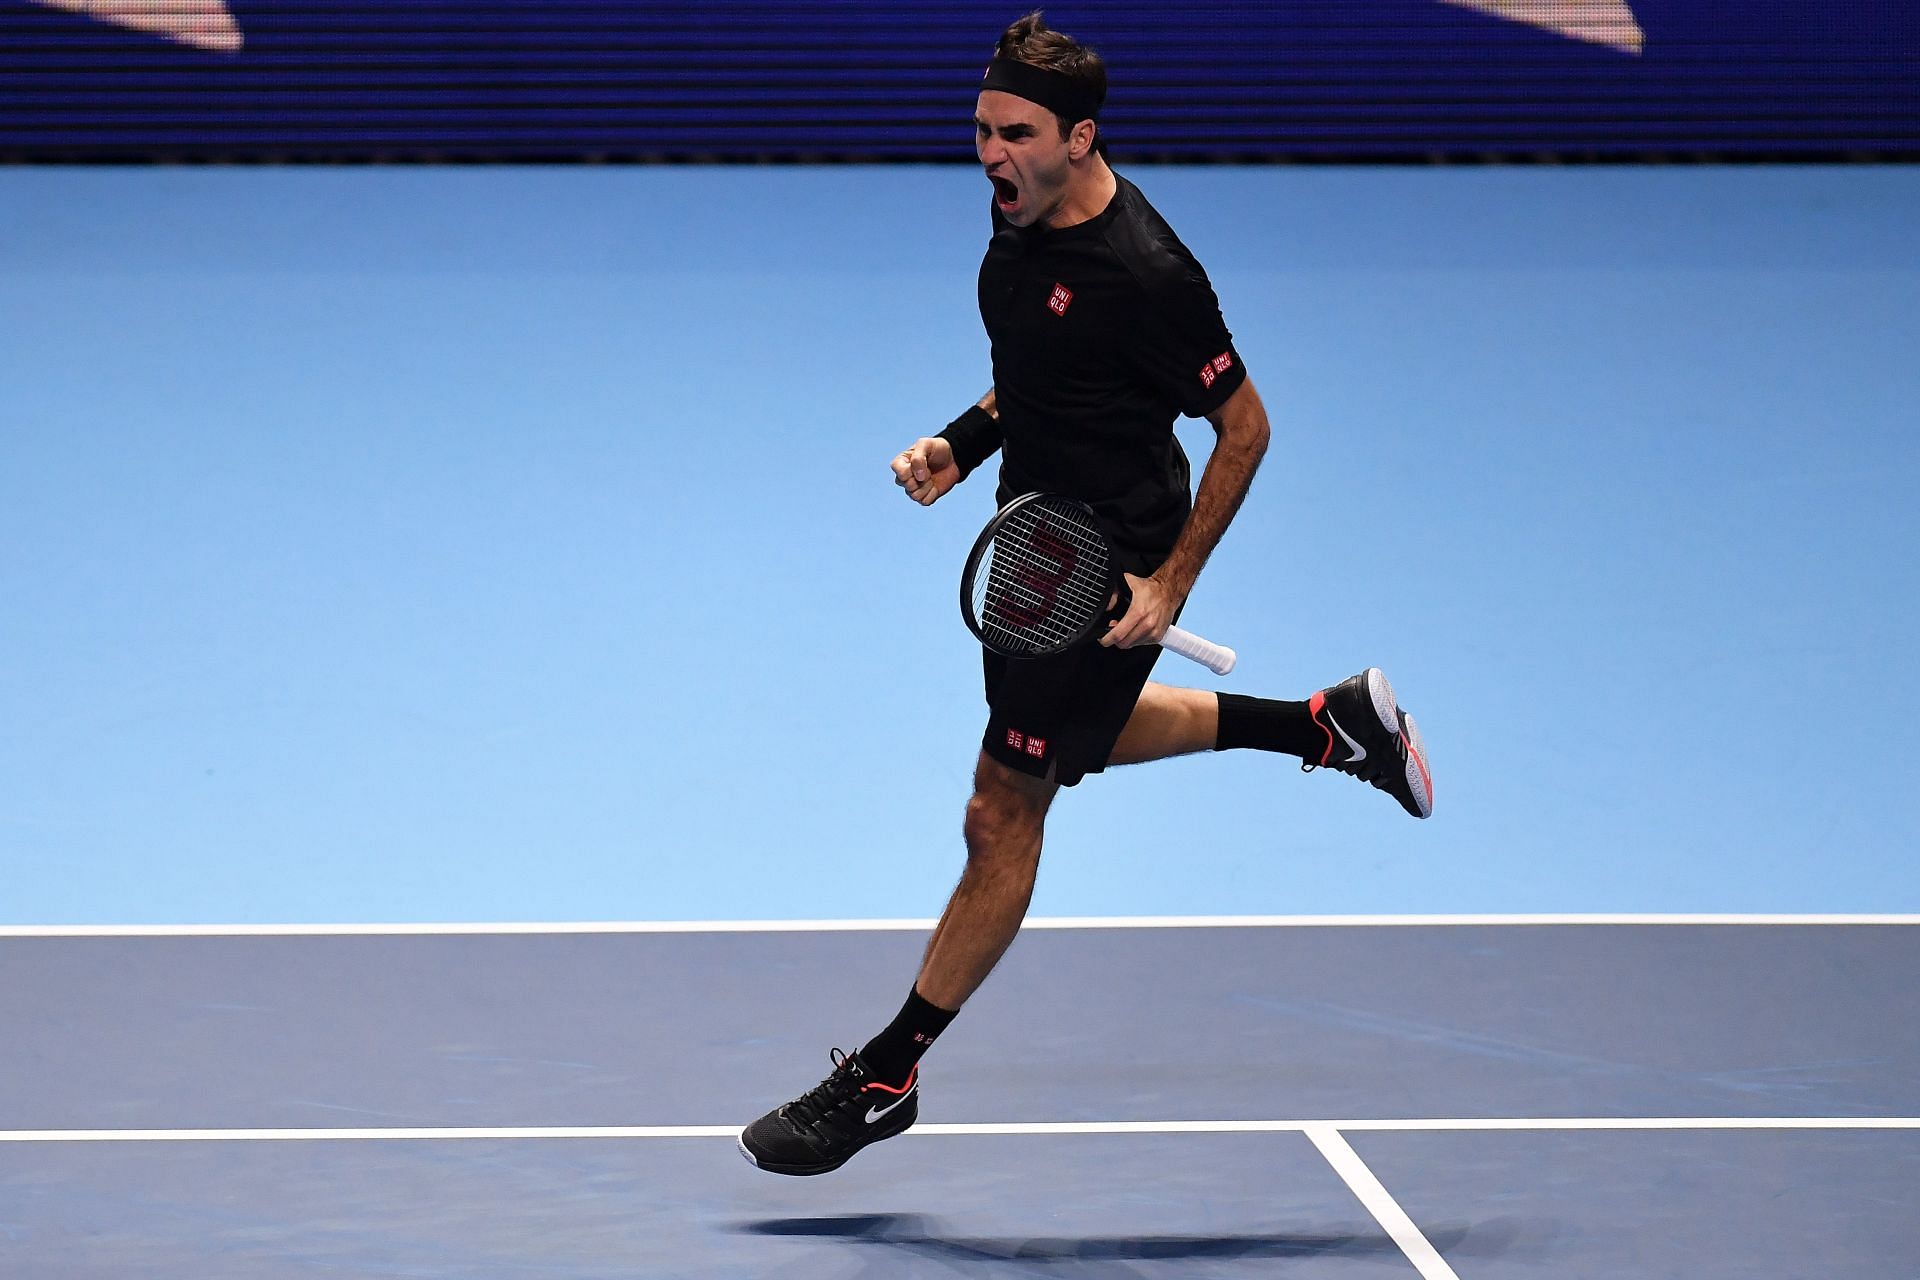 Roger Federer at the 2019 Nitto ATP Finals